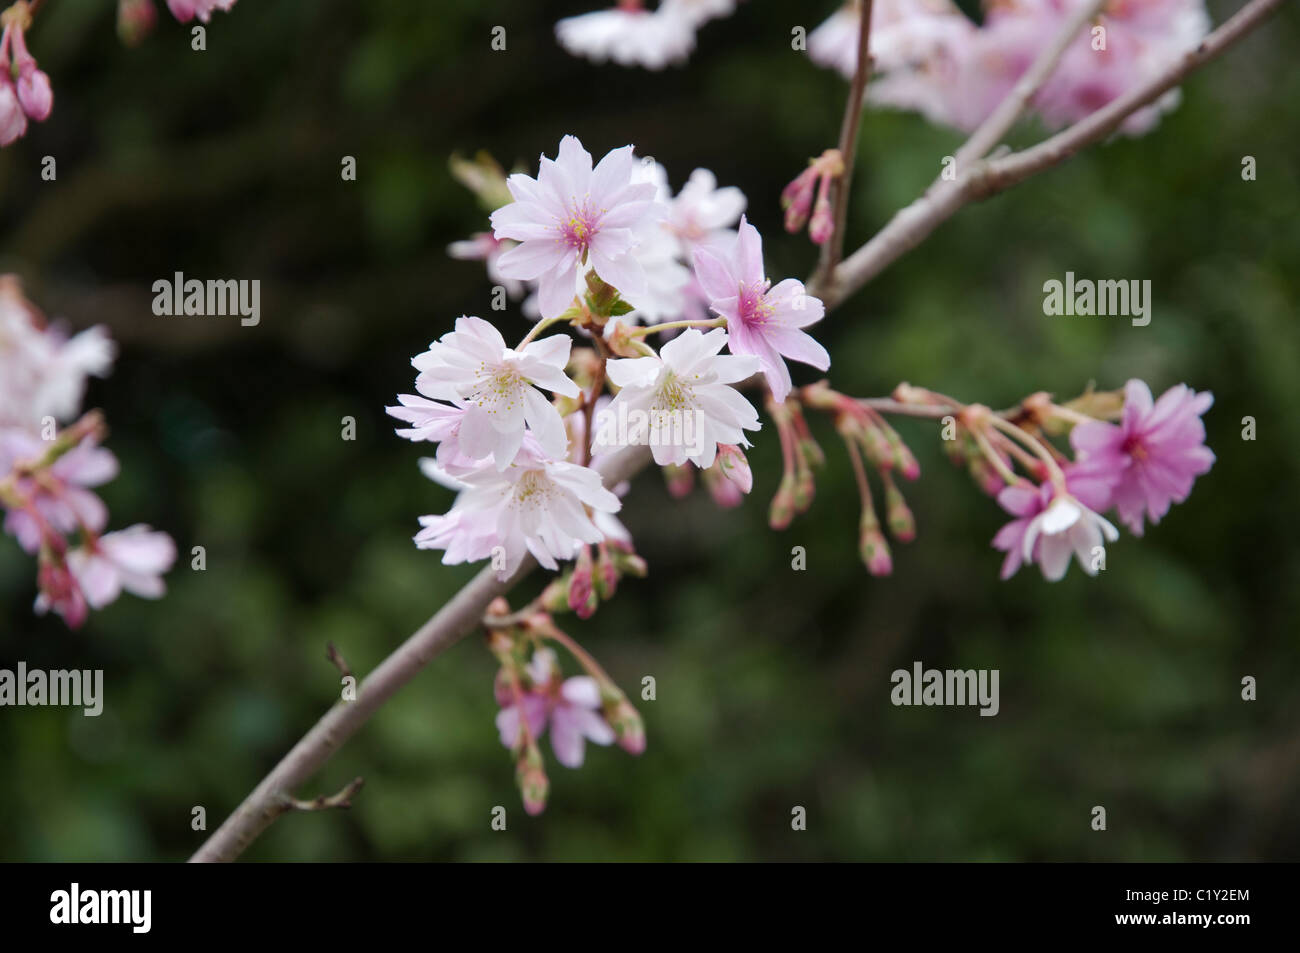 Prunus subhirtella Autumnalis - Pink in bud and tinged pink on opening - becoming white. The Winter Flowering Cherry. Stock Photo